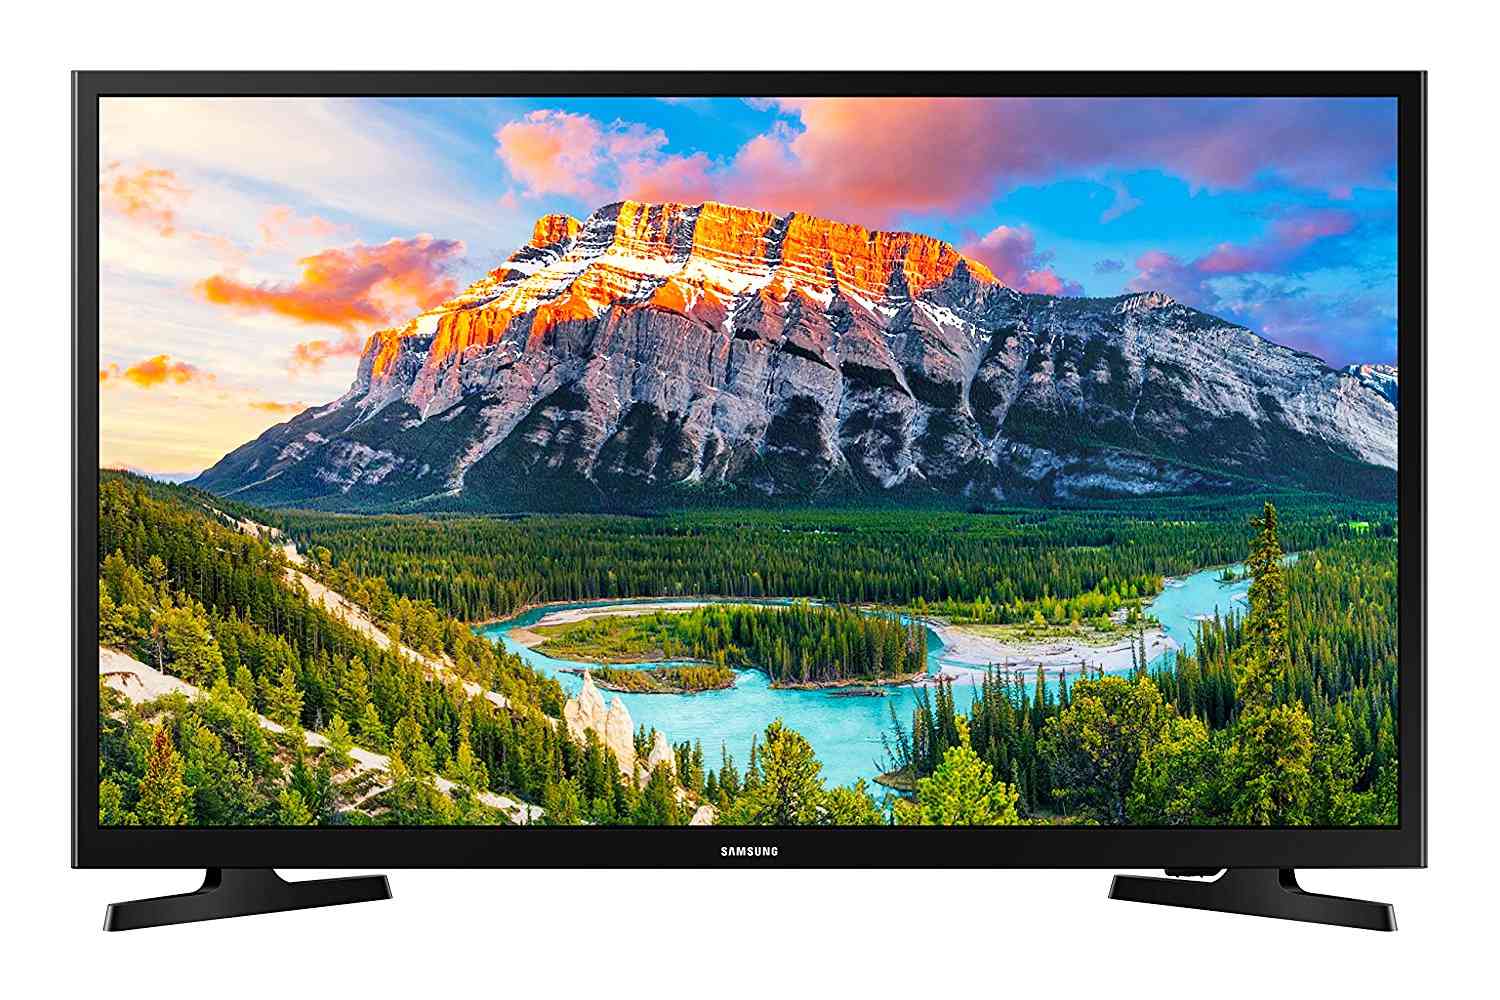 Samsung UN32N5300 1080p LED / LCD Smart TV